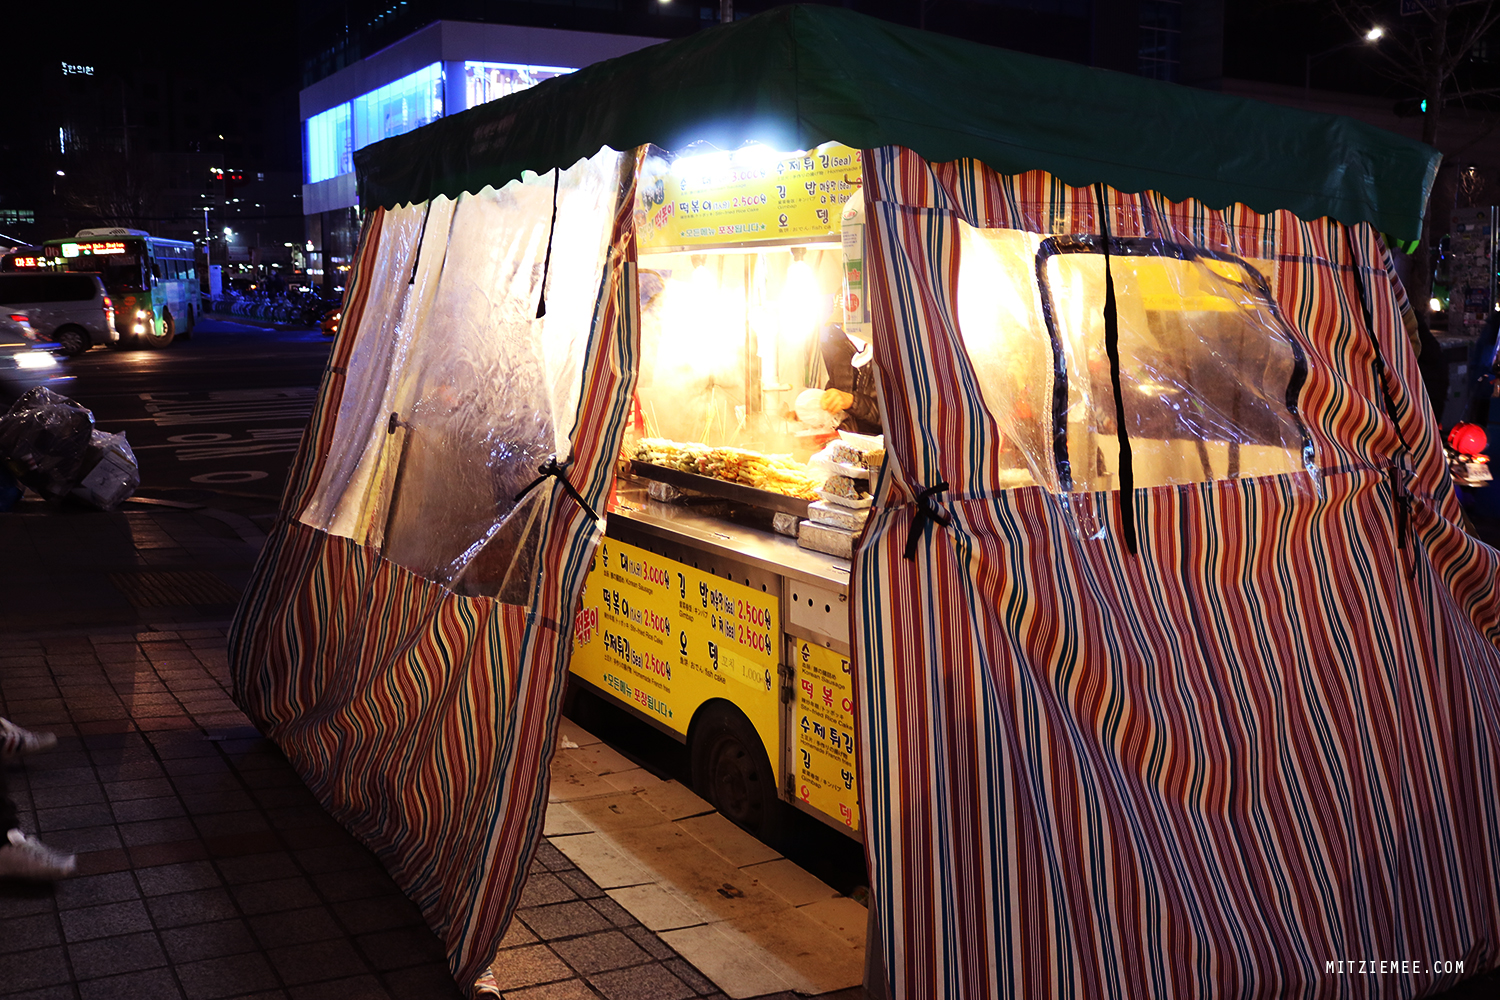 Pojangmacha tent restaurant in Hongdae, Seoul